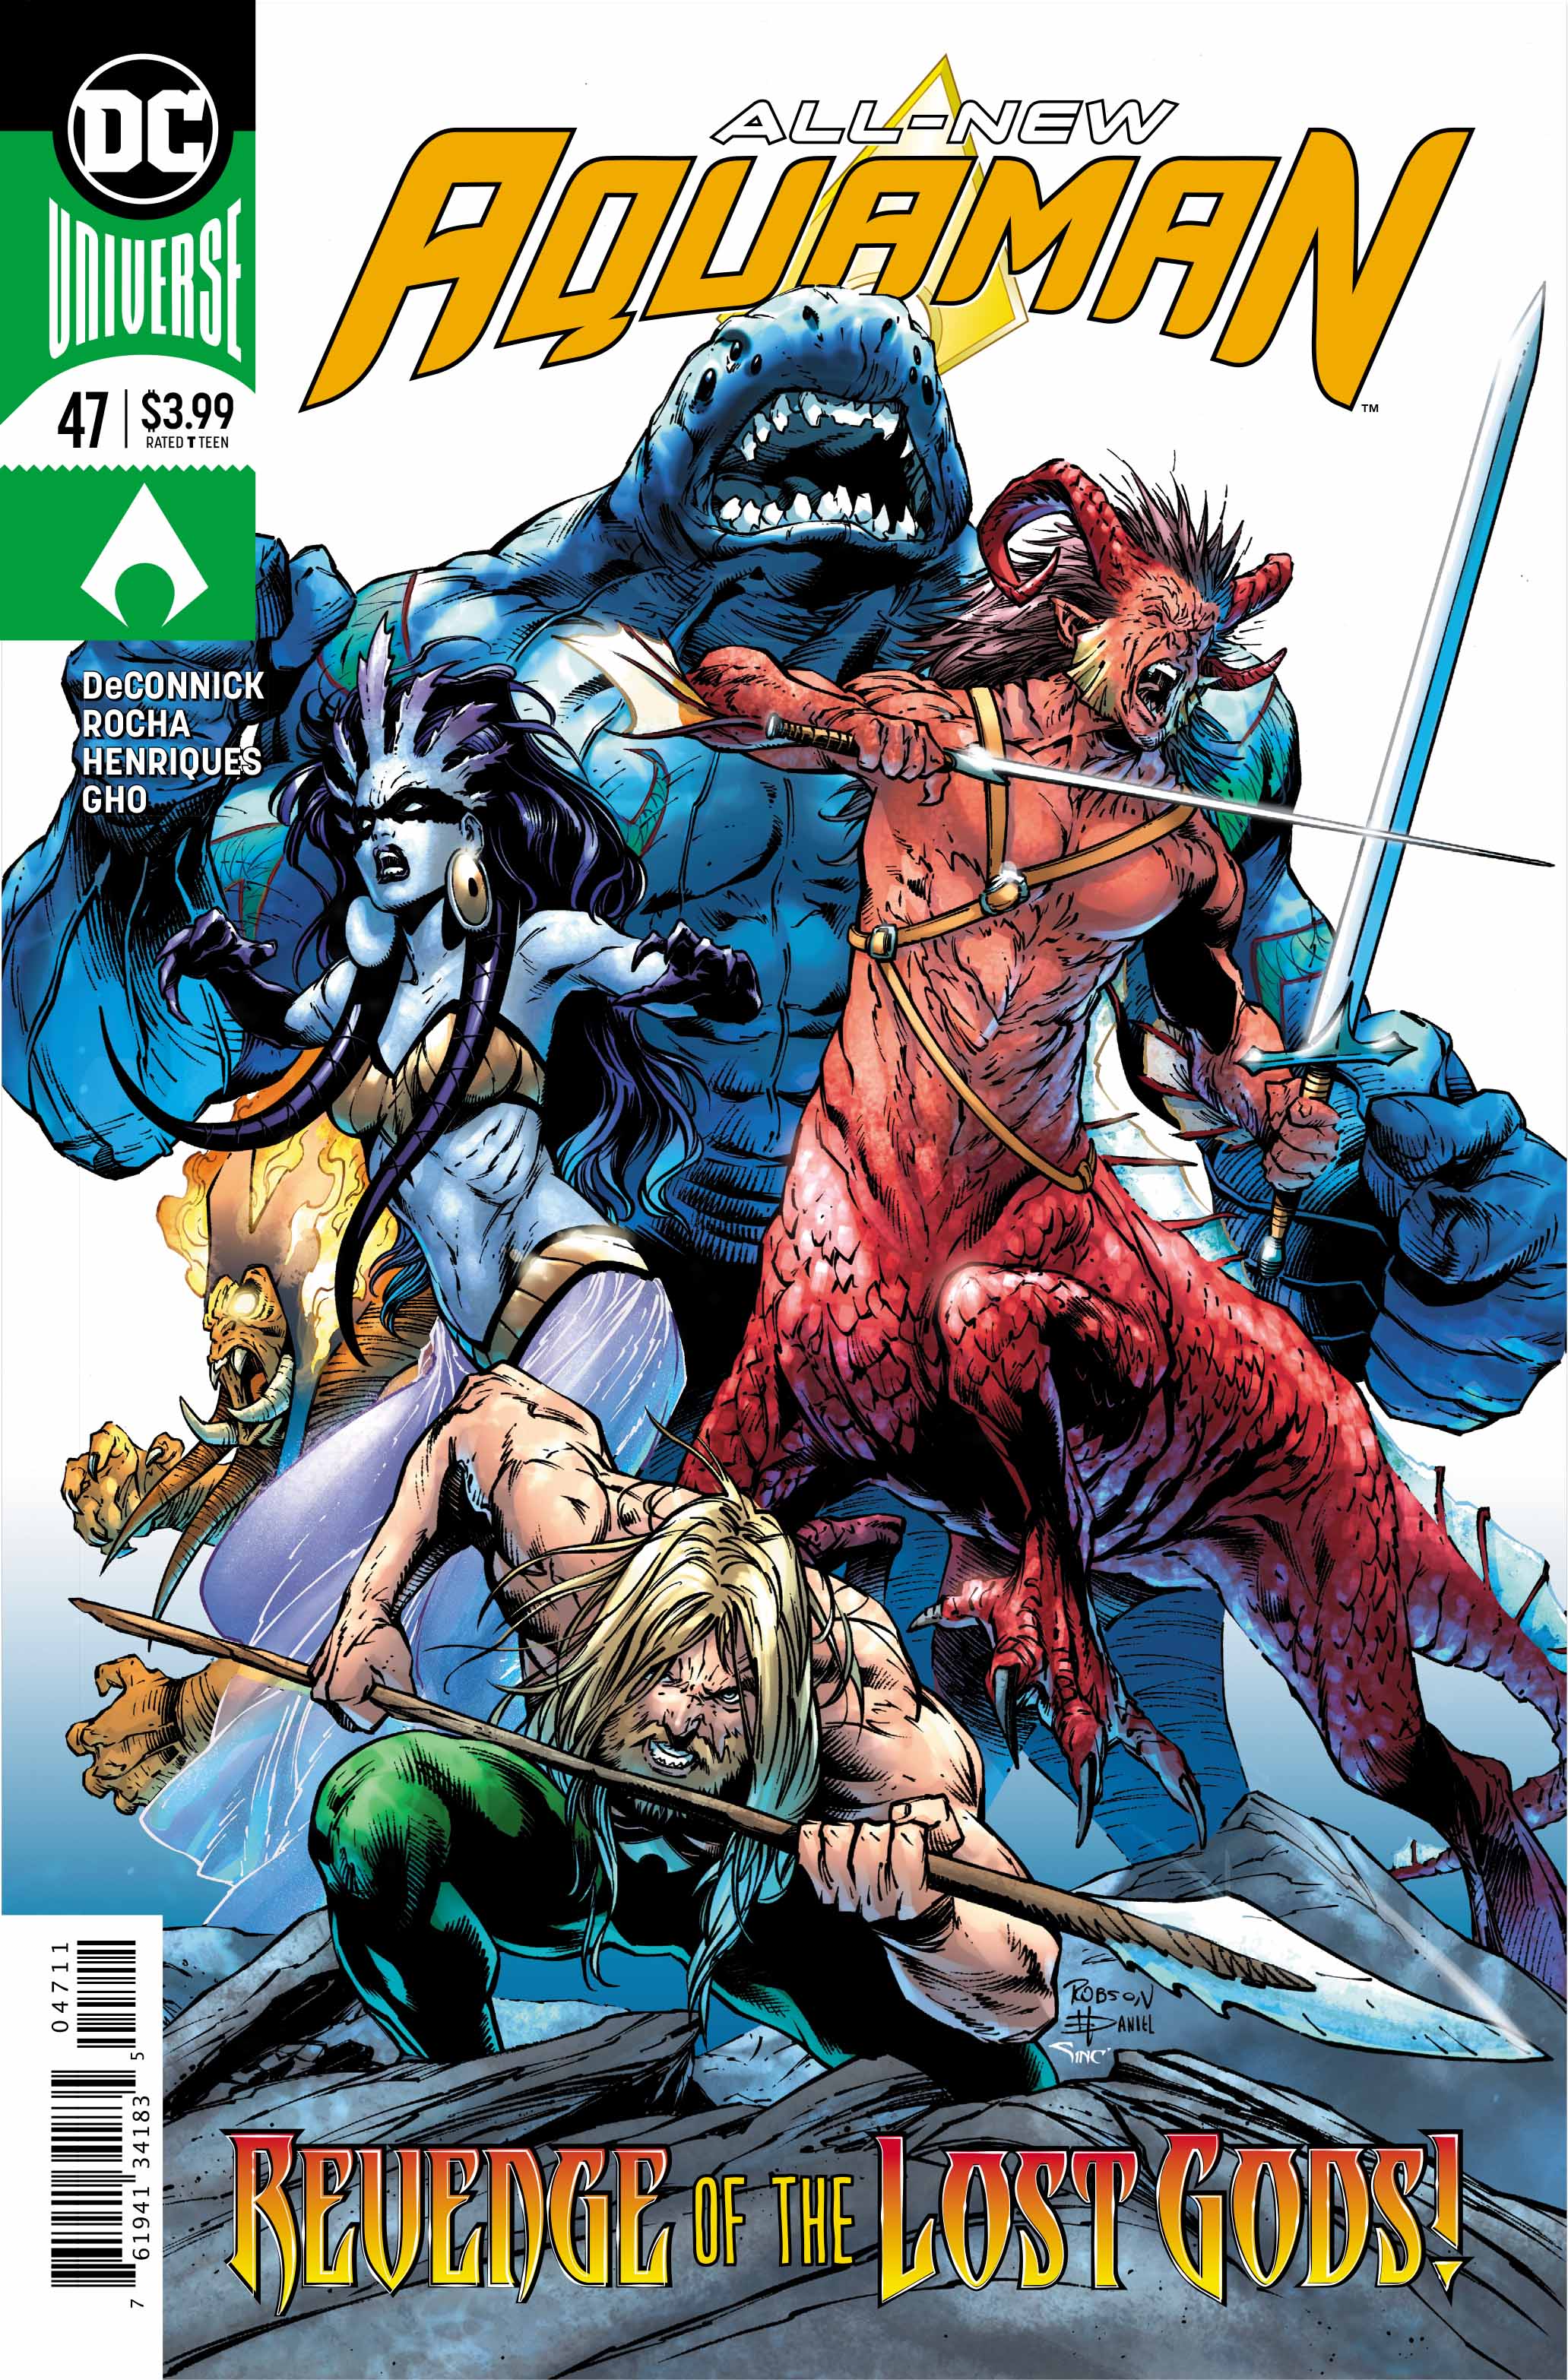 Aquaman #47 cover